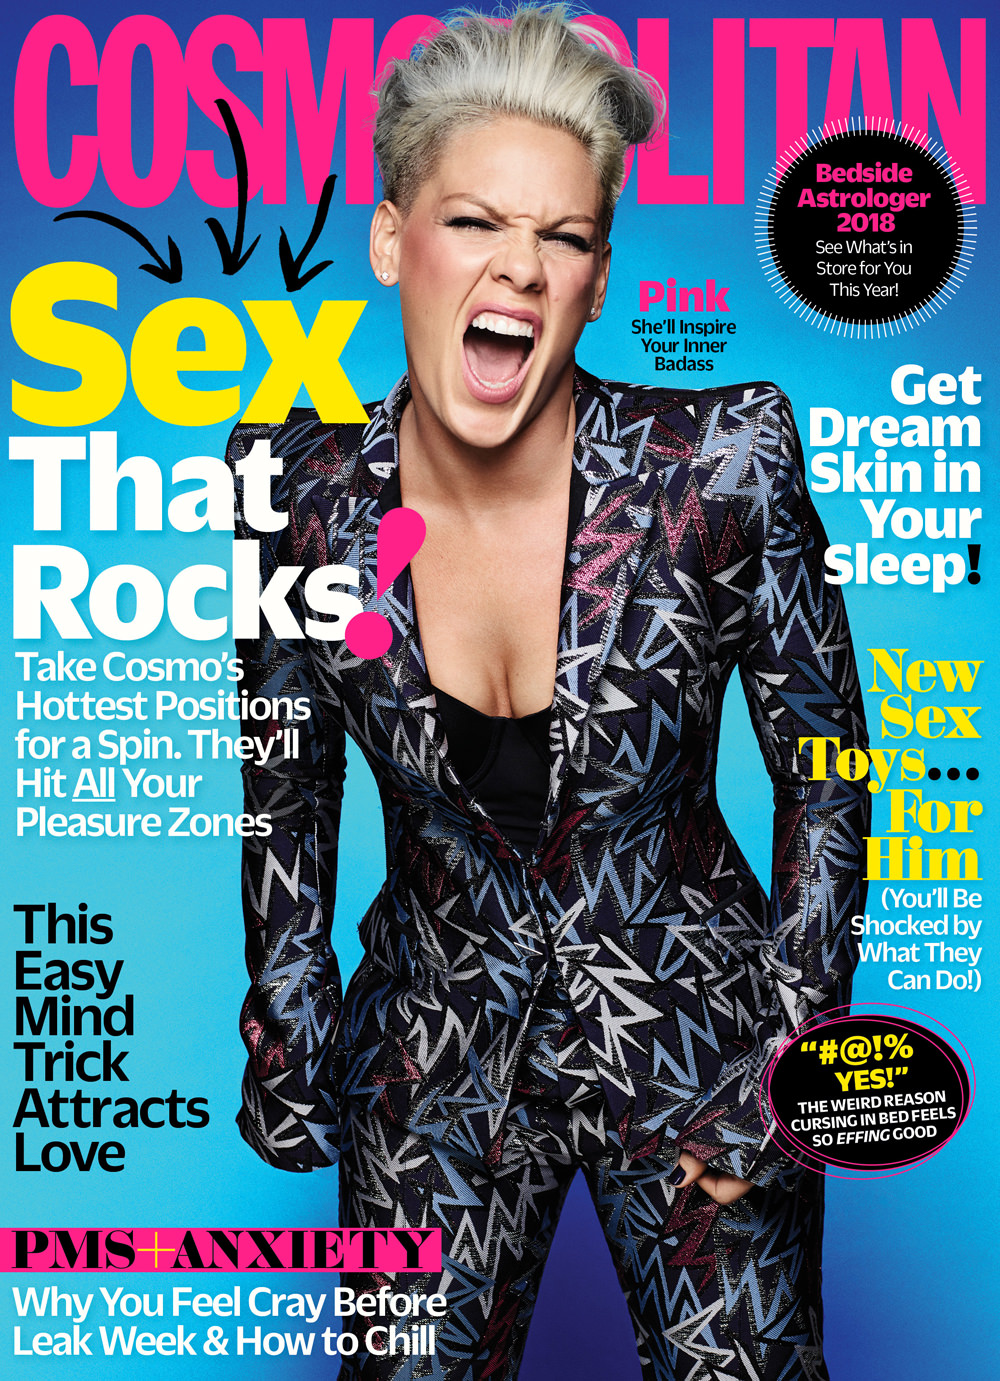 Cosmopolitancom - The Womens Magazine for Fashion, Sex